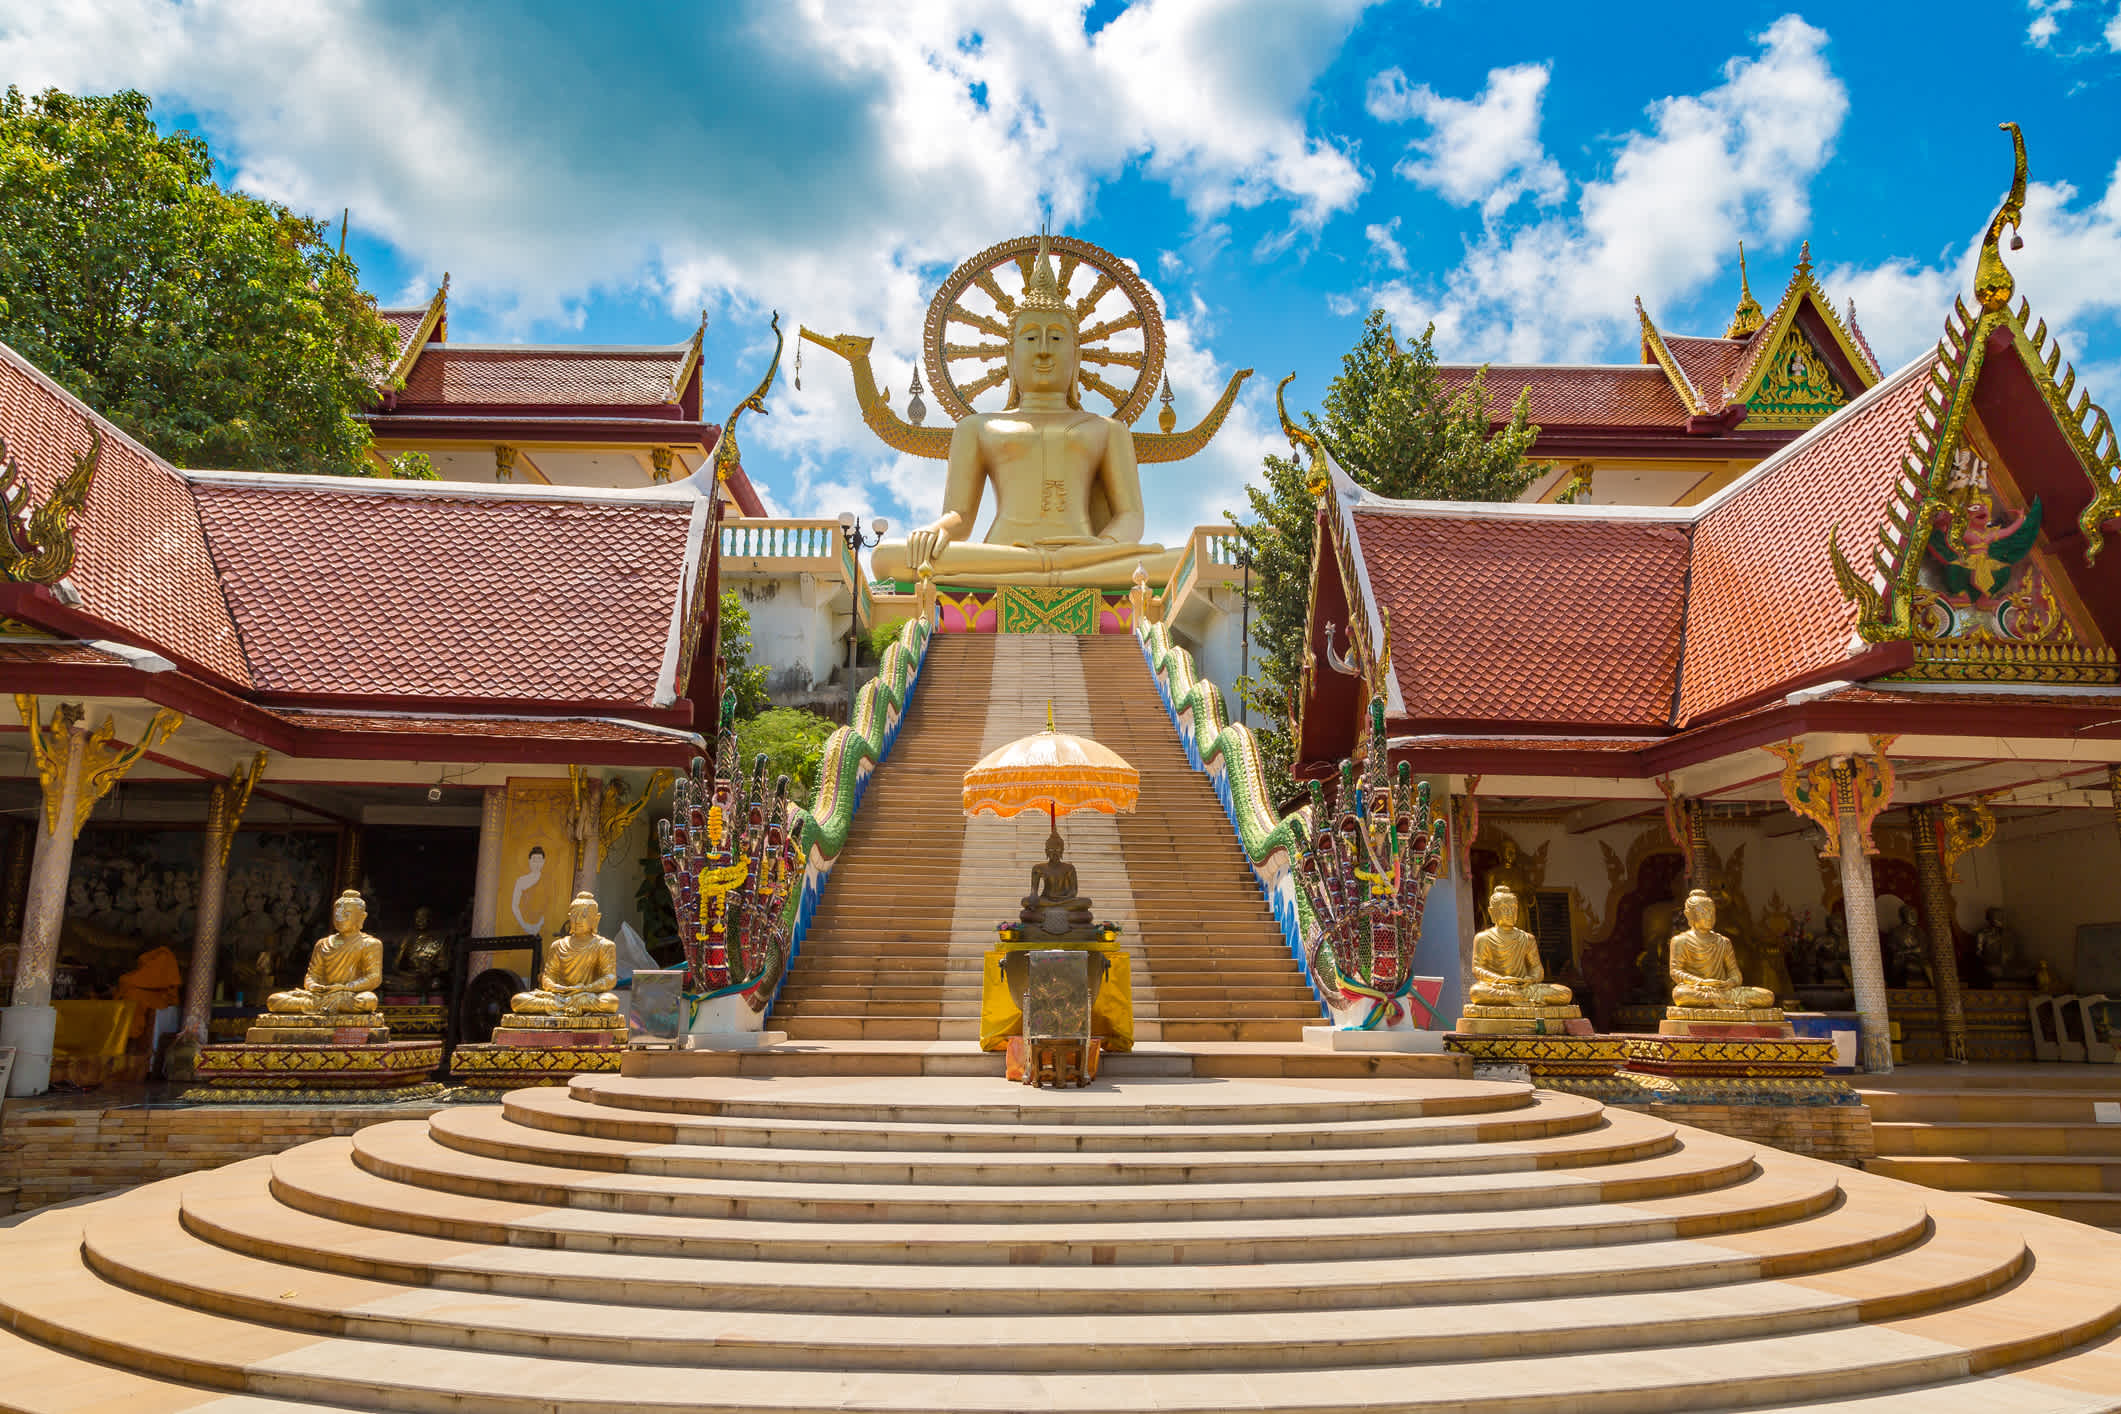 Grande statue de Bouddha à Koh Samui, Thaïlande

